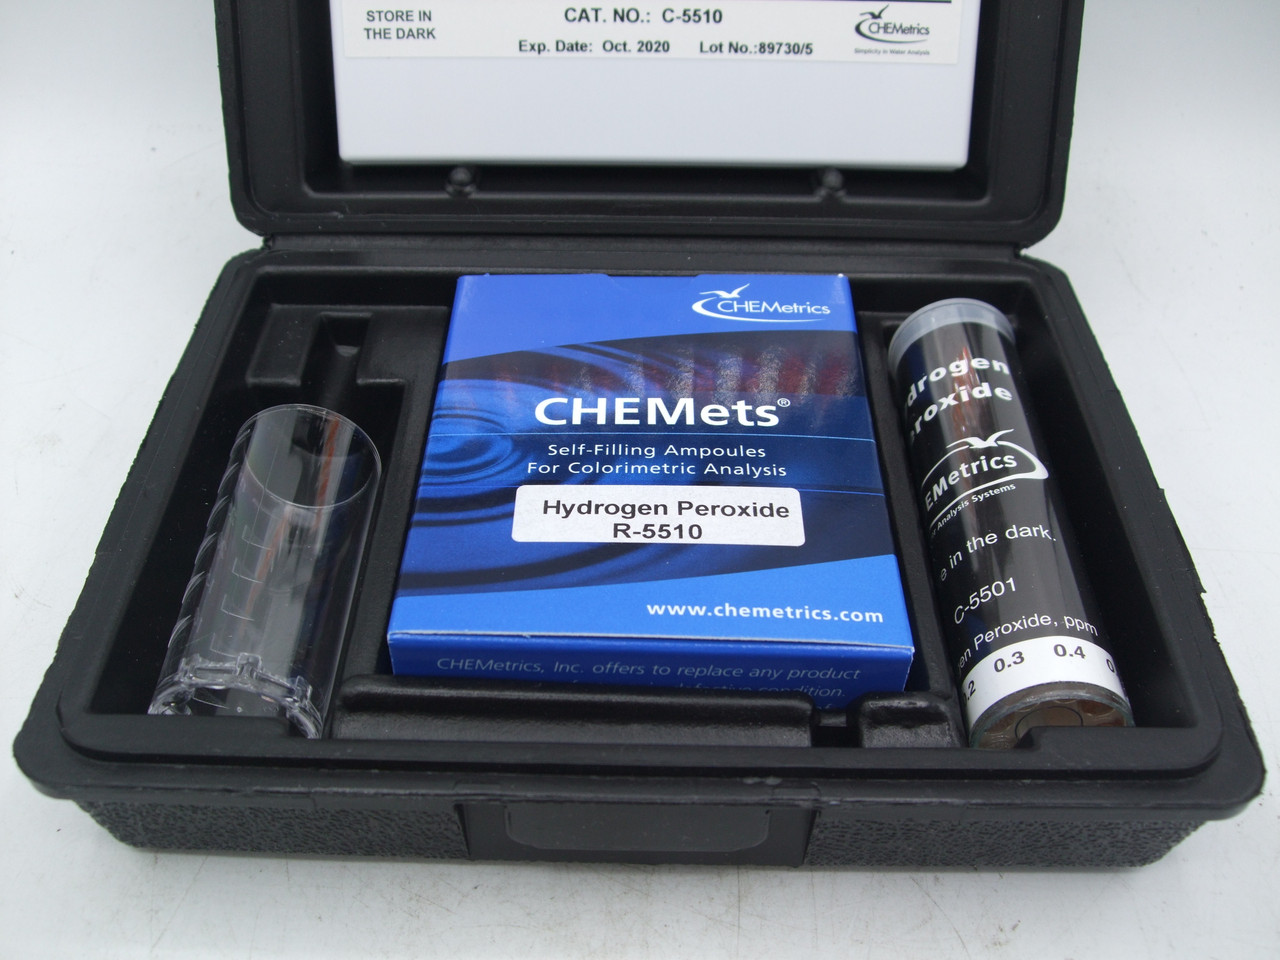 Chemetrics K-5510 Hydrogen Peroxide CHEMets Kit